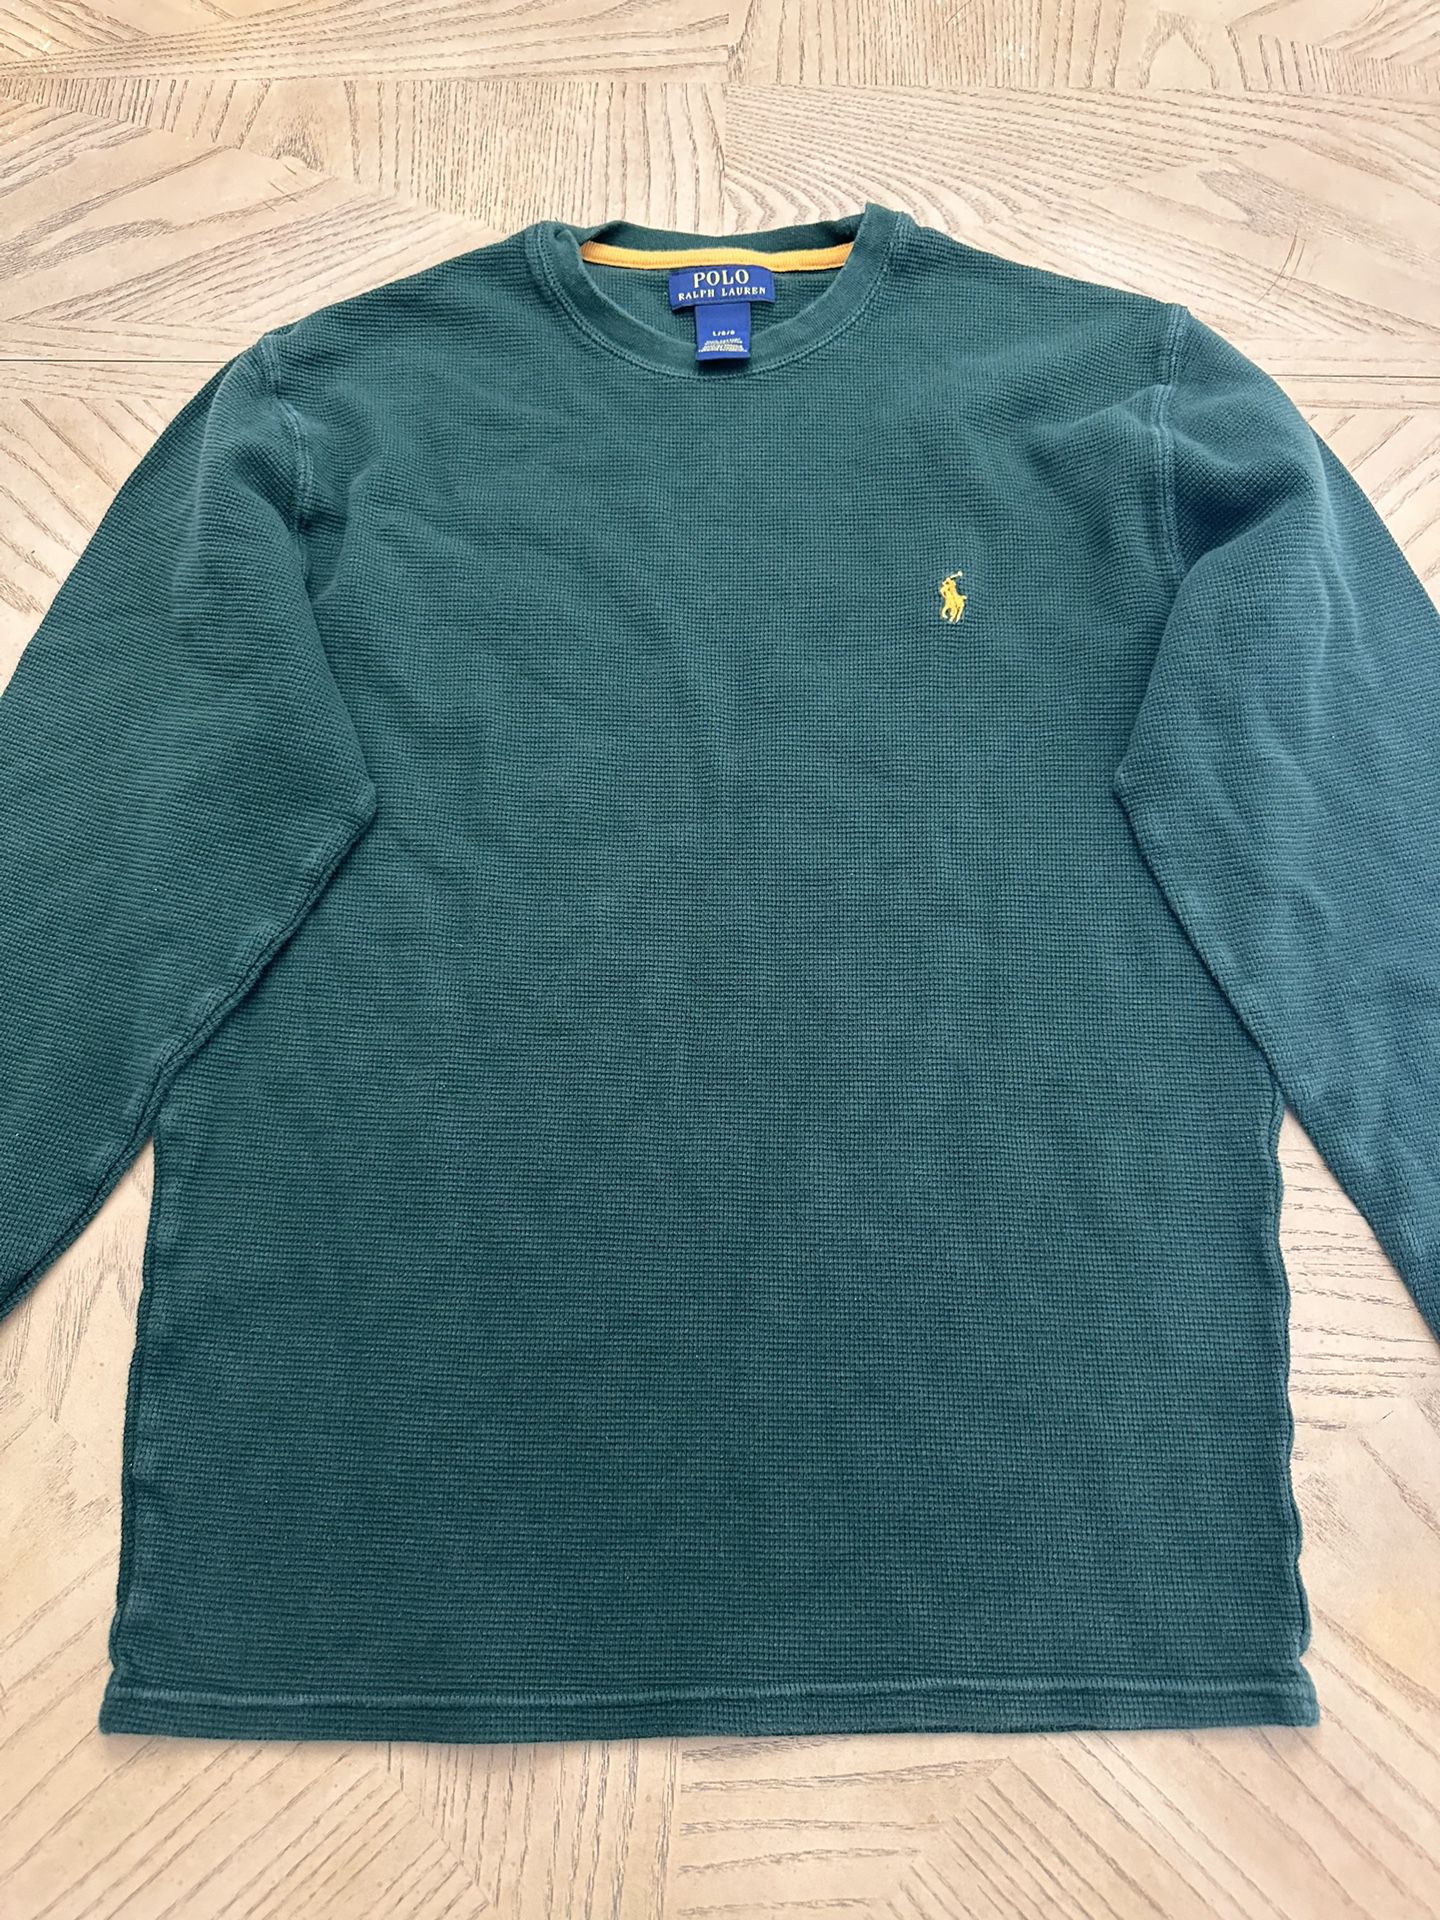 Polo Ralph Lauren Green Long Sleeve Crewneck Waffle Knit  T-Shirt  Size large